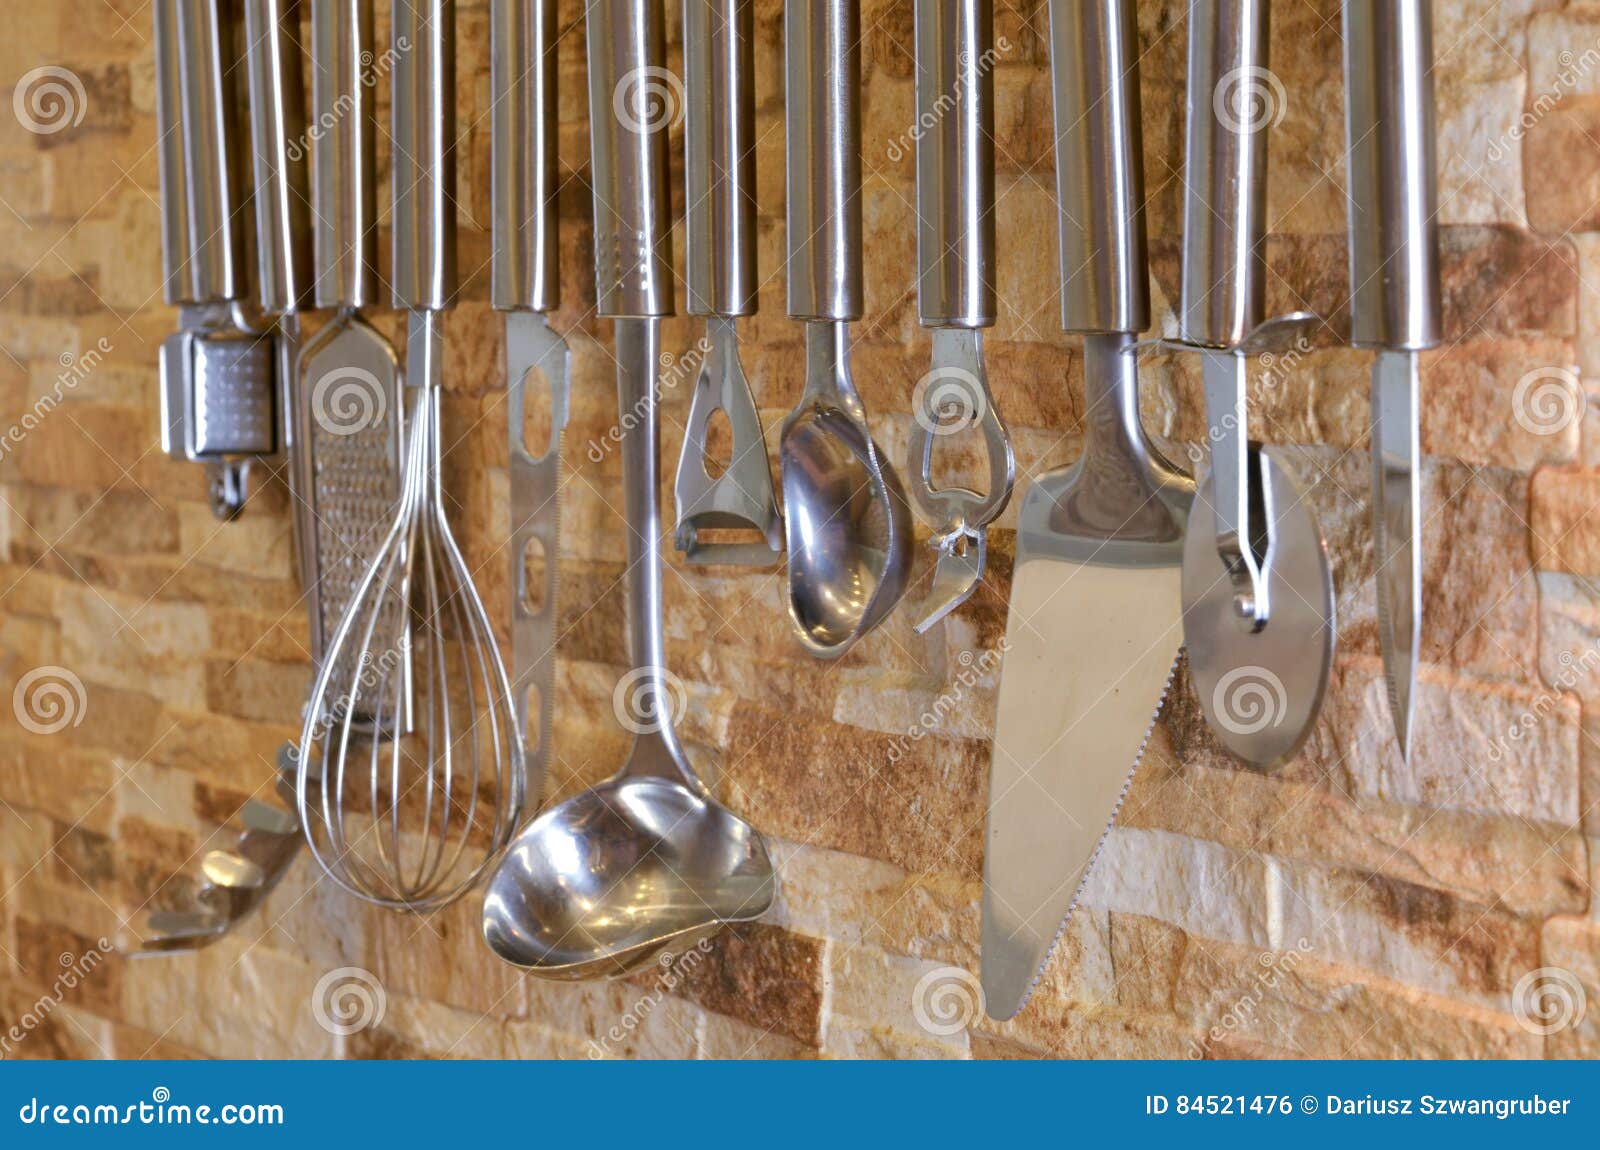 set of kitchen utensils wall vinyl art